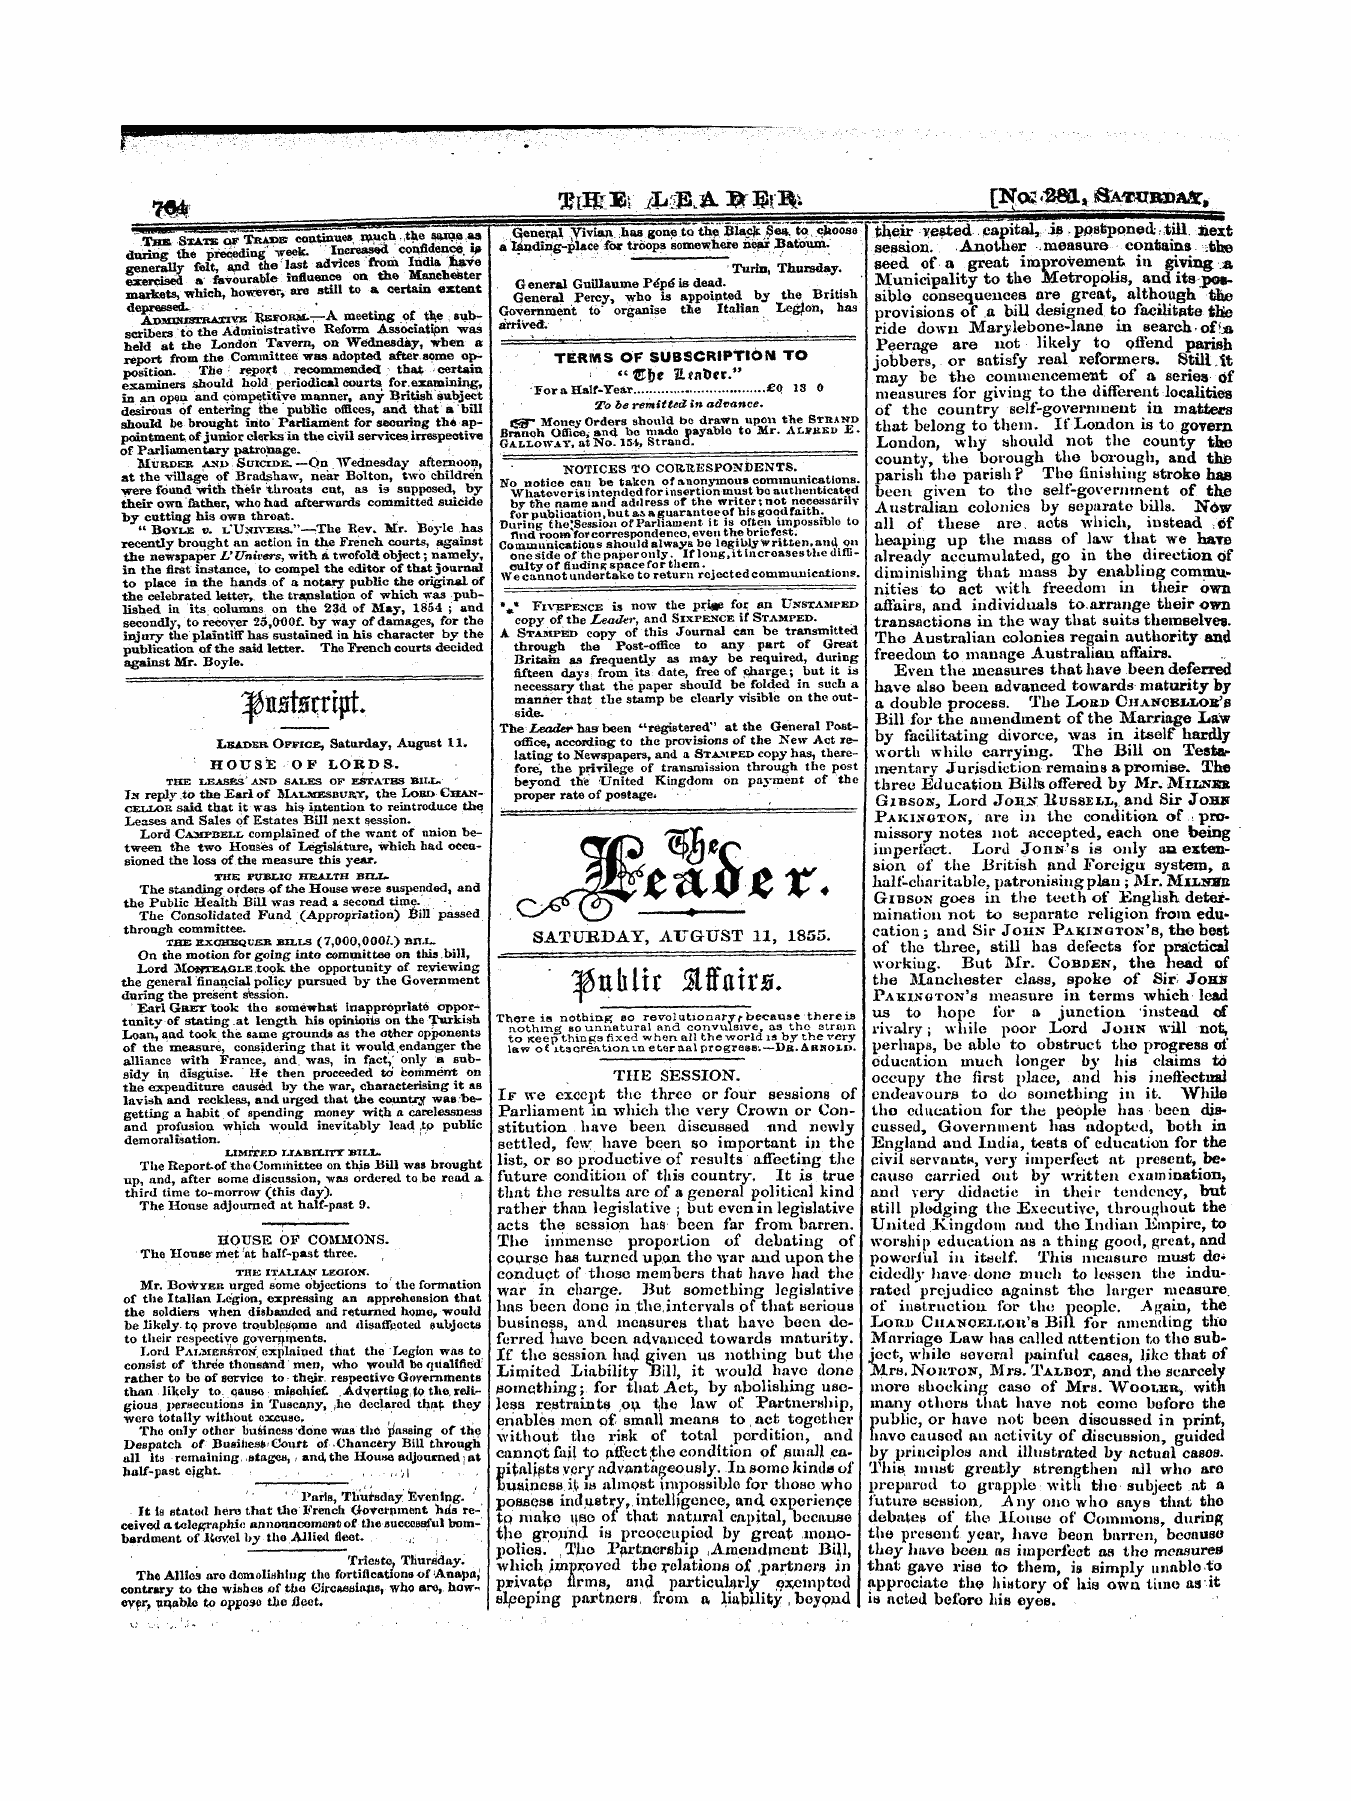 Leader (1850-1860): jS F Y, 1st edition - F ¦ " I • T J Miftsttlpu ^